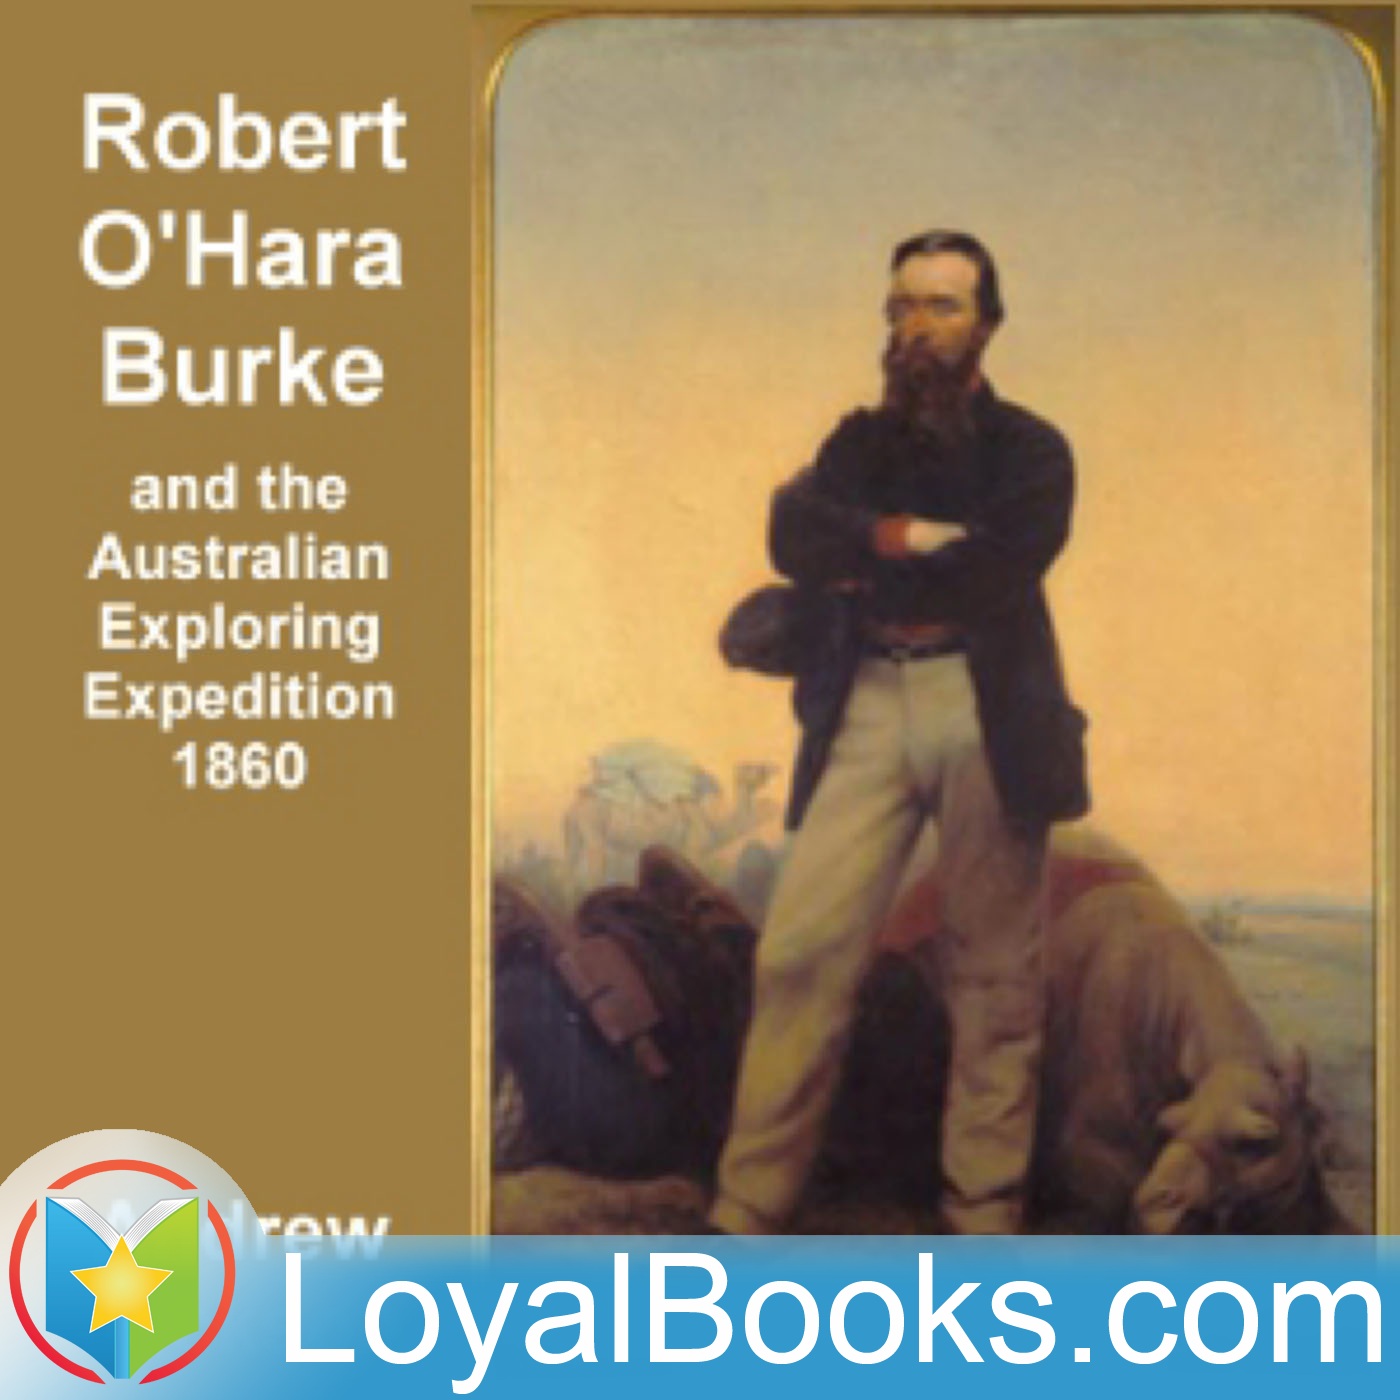 Robert O'Hara Burke by Andrew Jackson